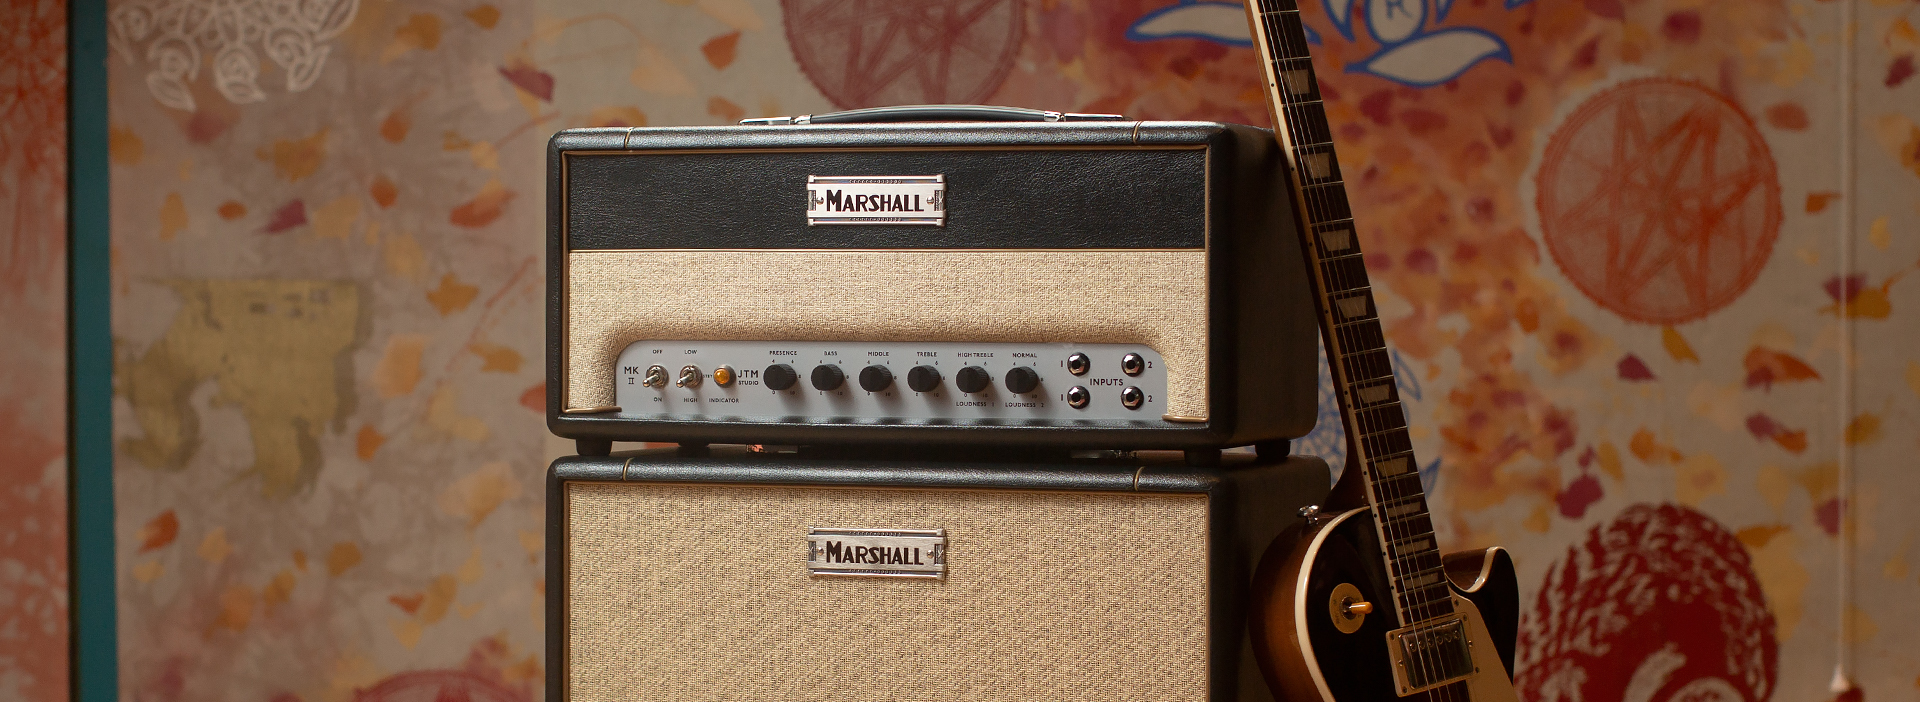 A close up of a Marshall Studio range amplifier speaker.